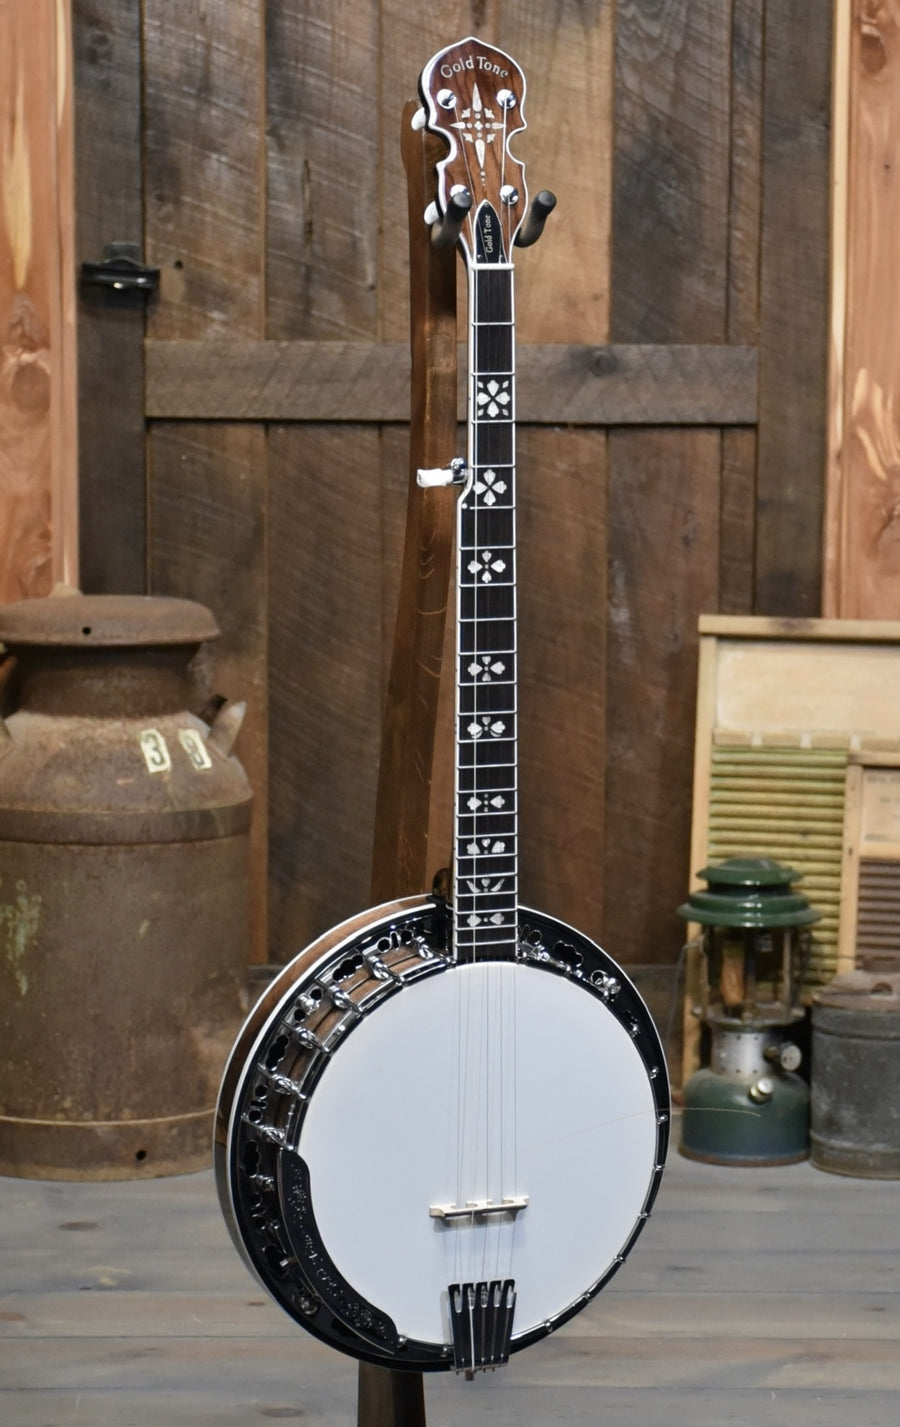 Gold Tone BG-150F Lightweight Bluegrass Banjo With Case